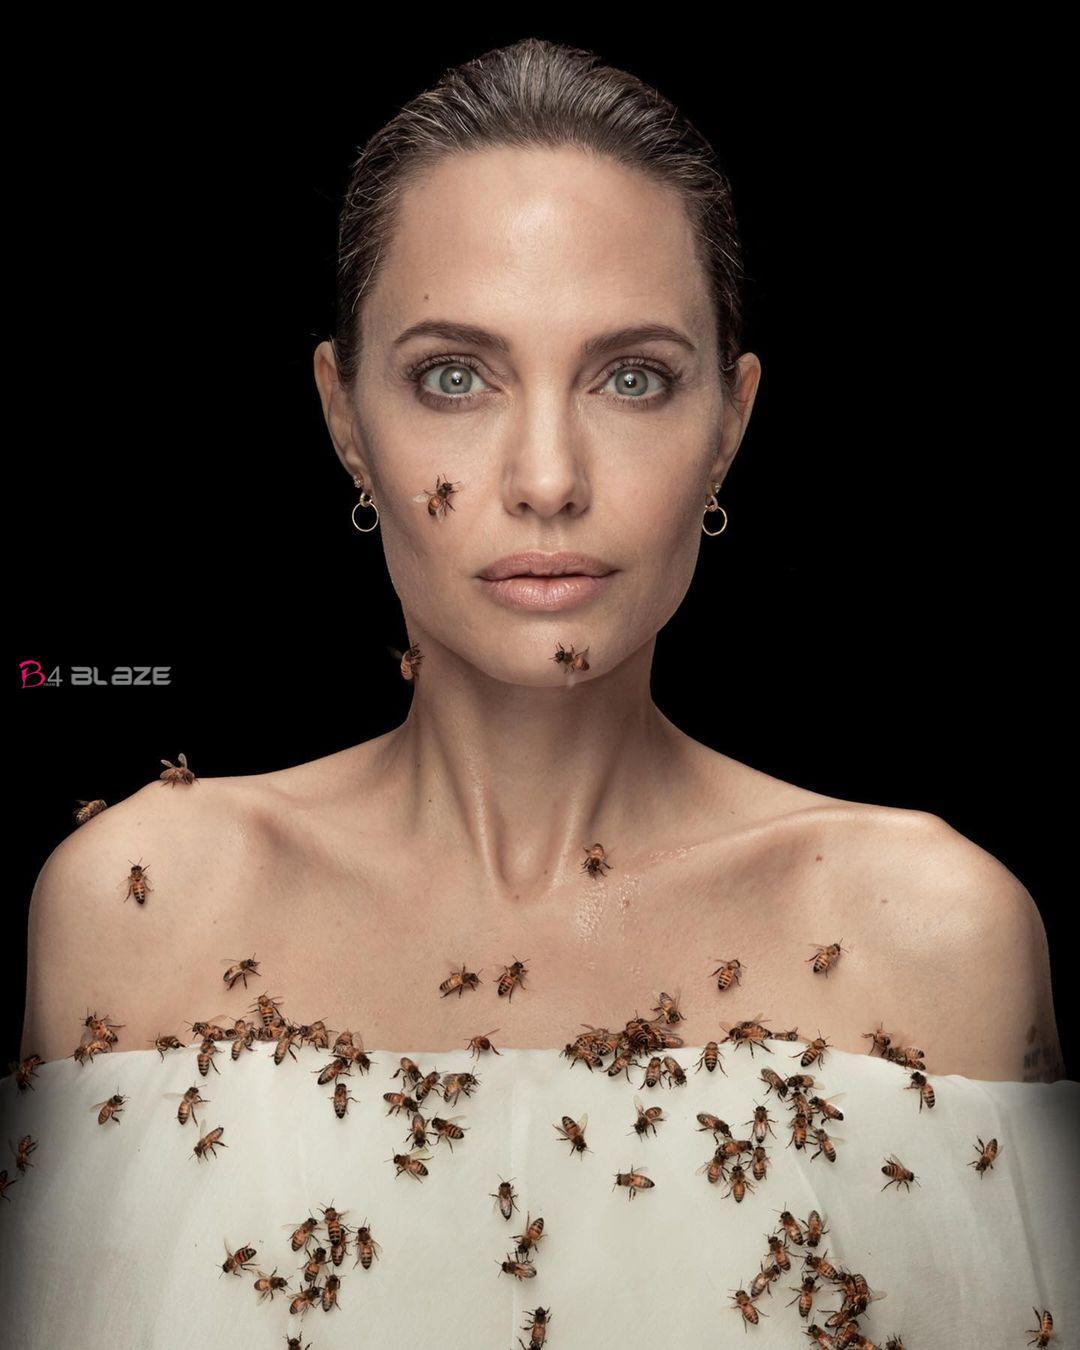 Angelina Jolie's most dangerous photoshoot